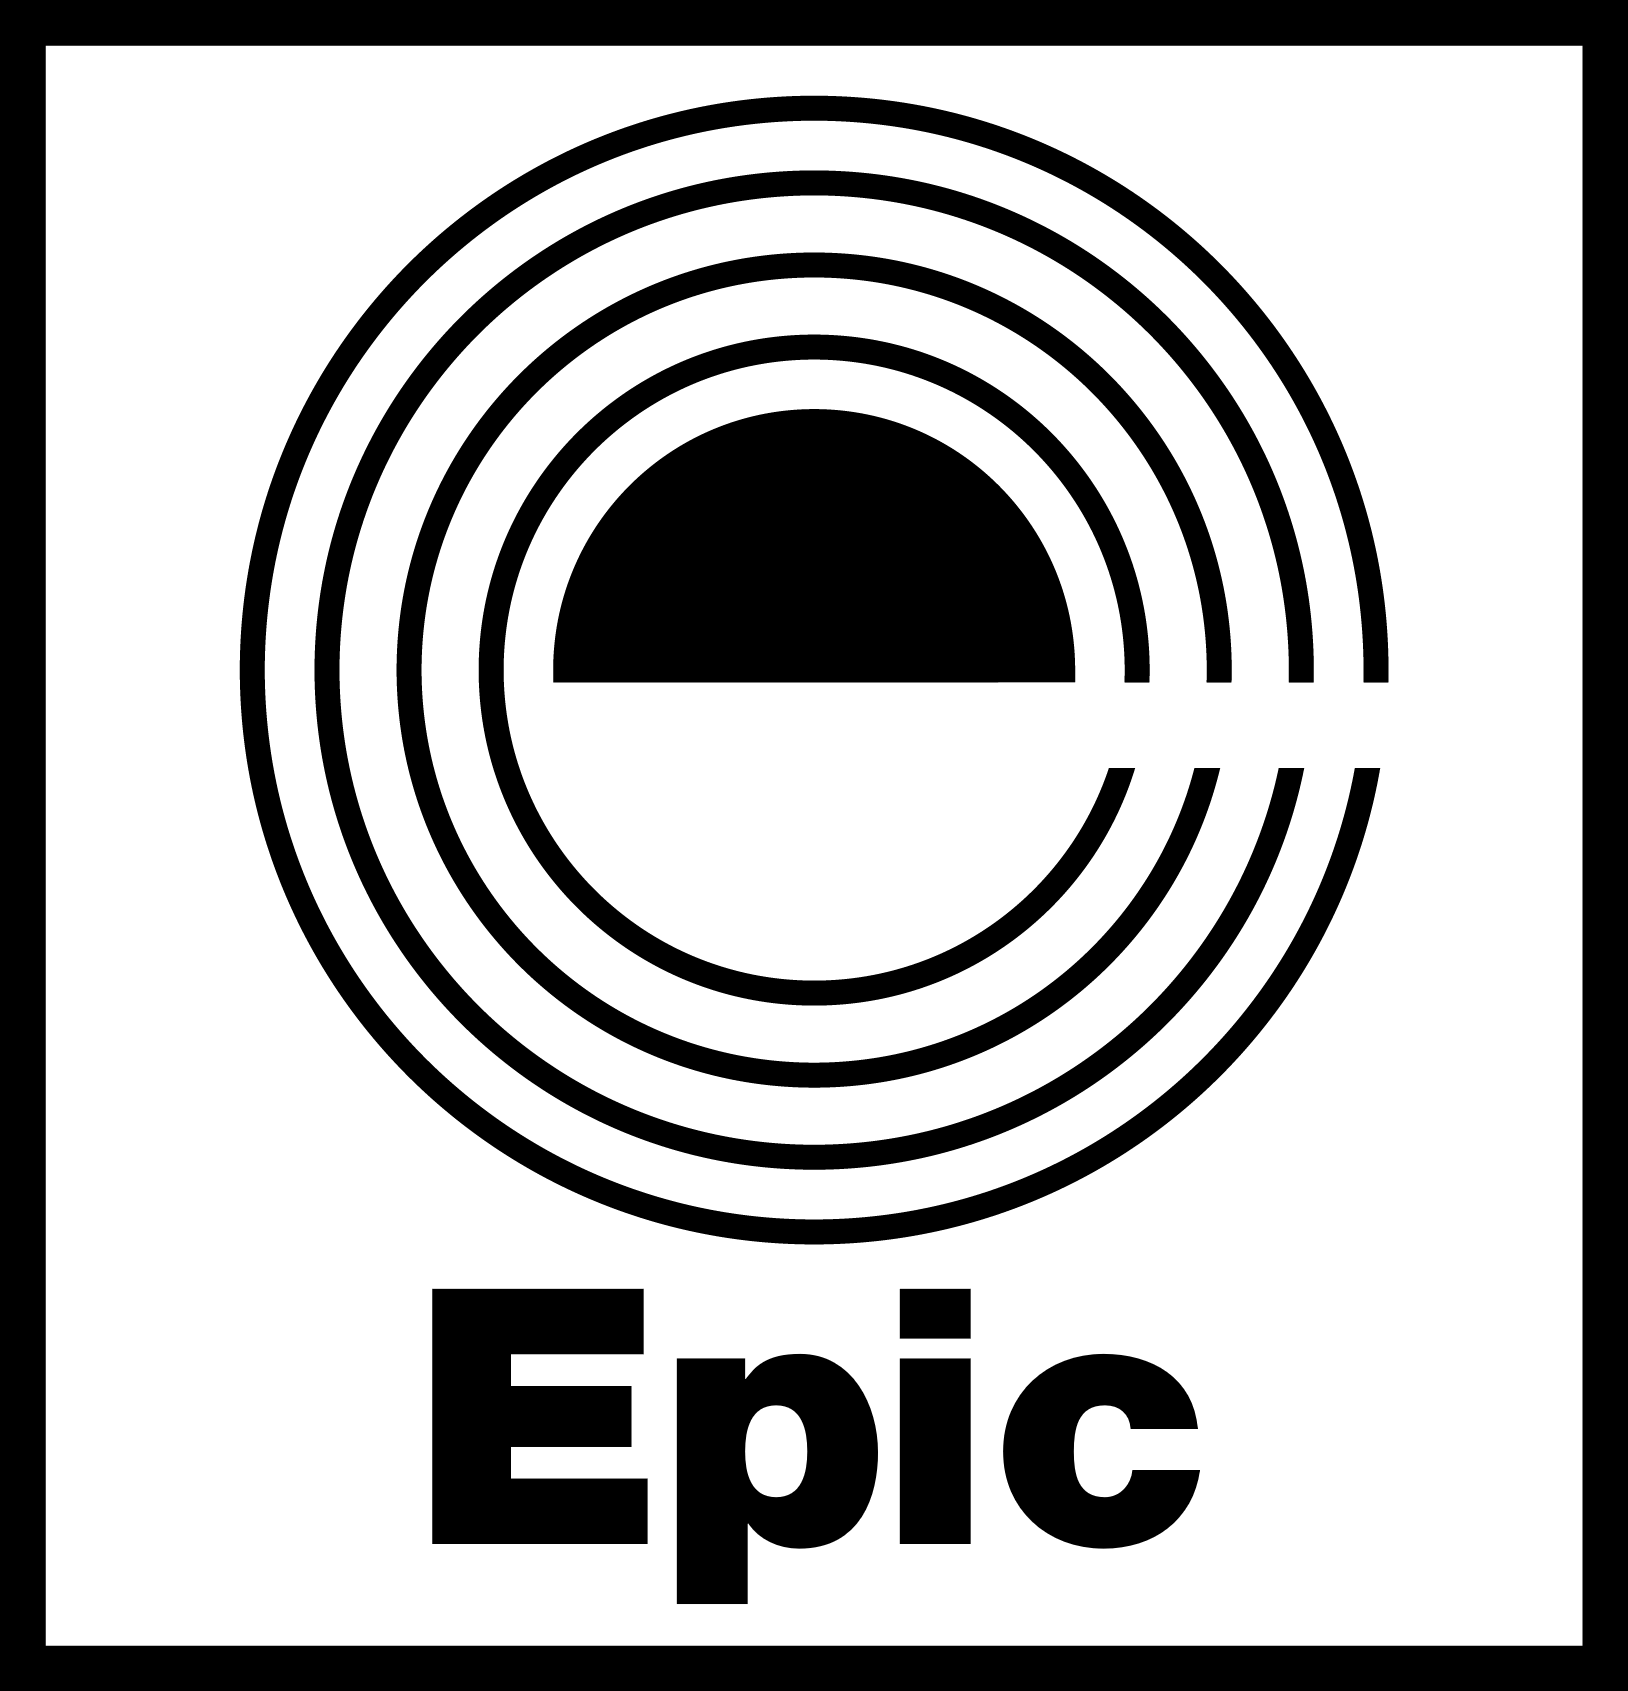 epic records logo 2022